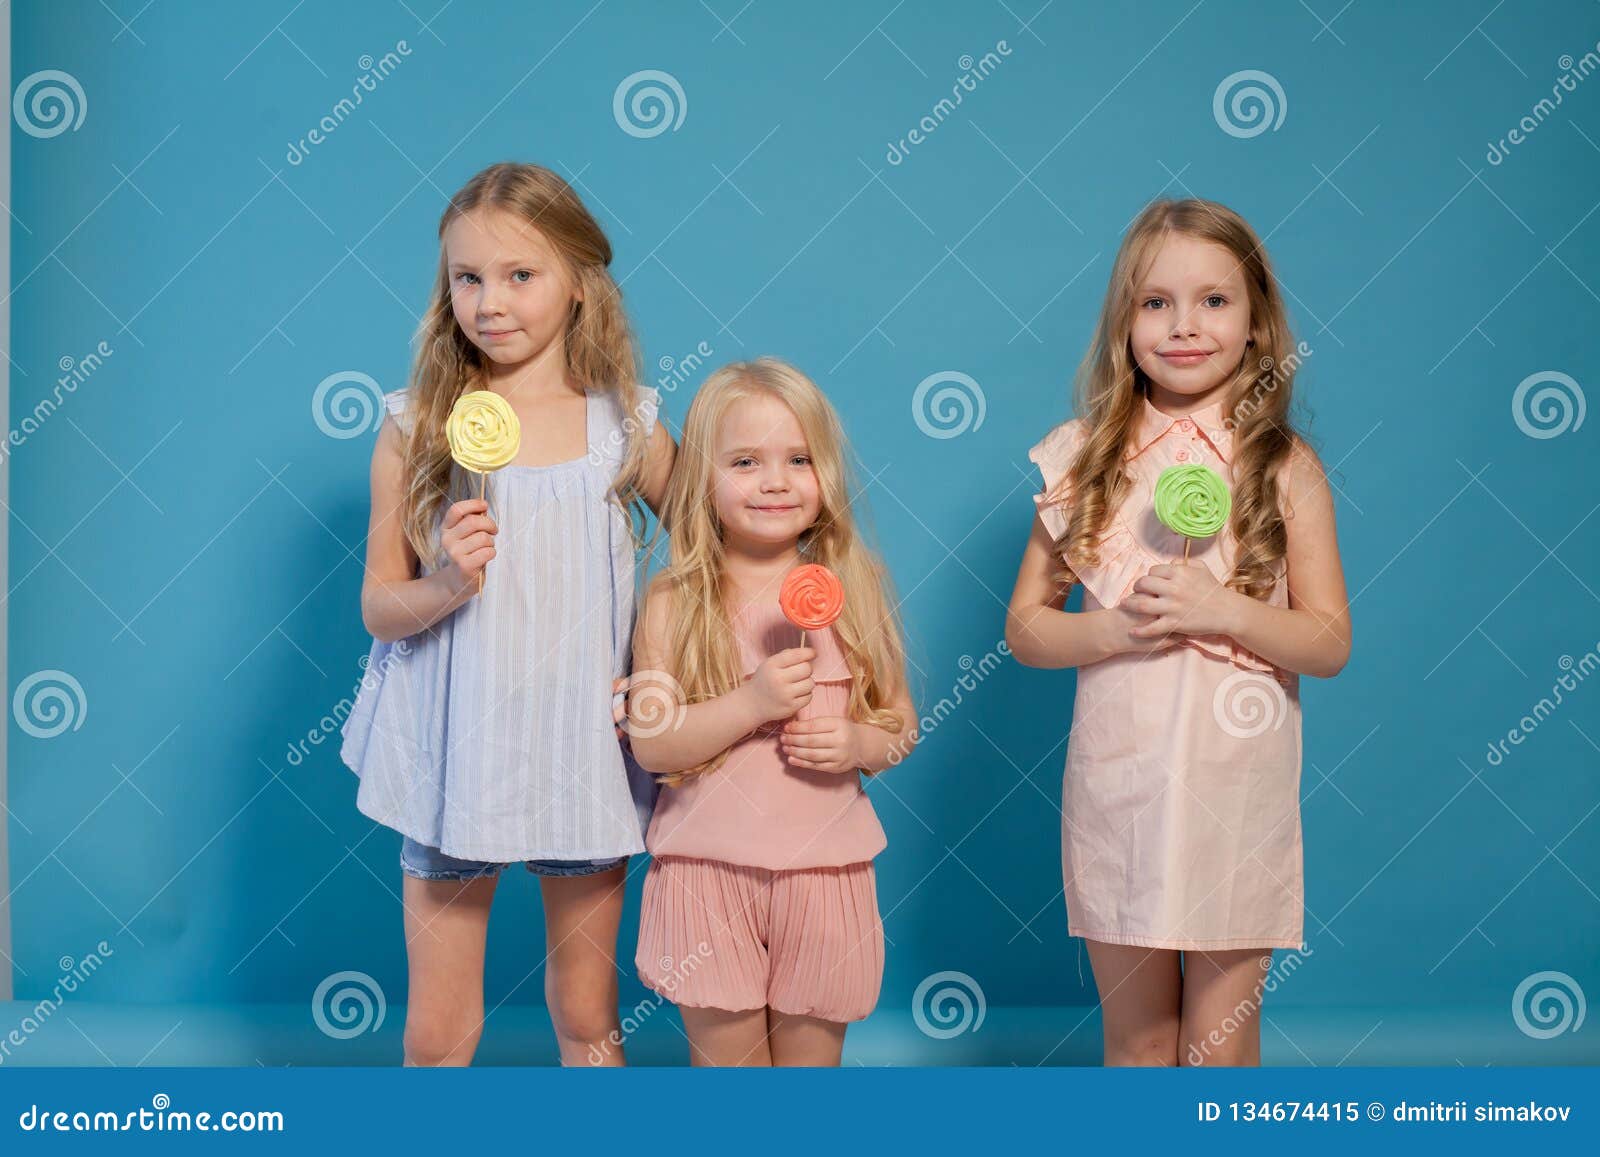 Eat Sweet Candy Lollipop Three Little Girls Blonde Stock Image Image